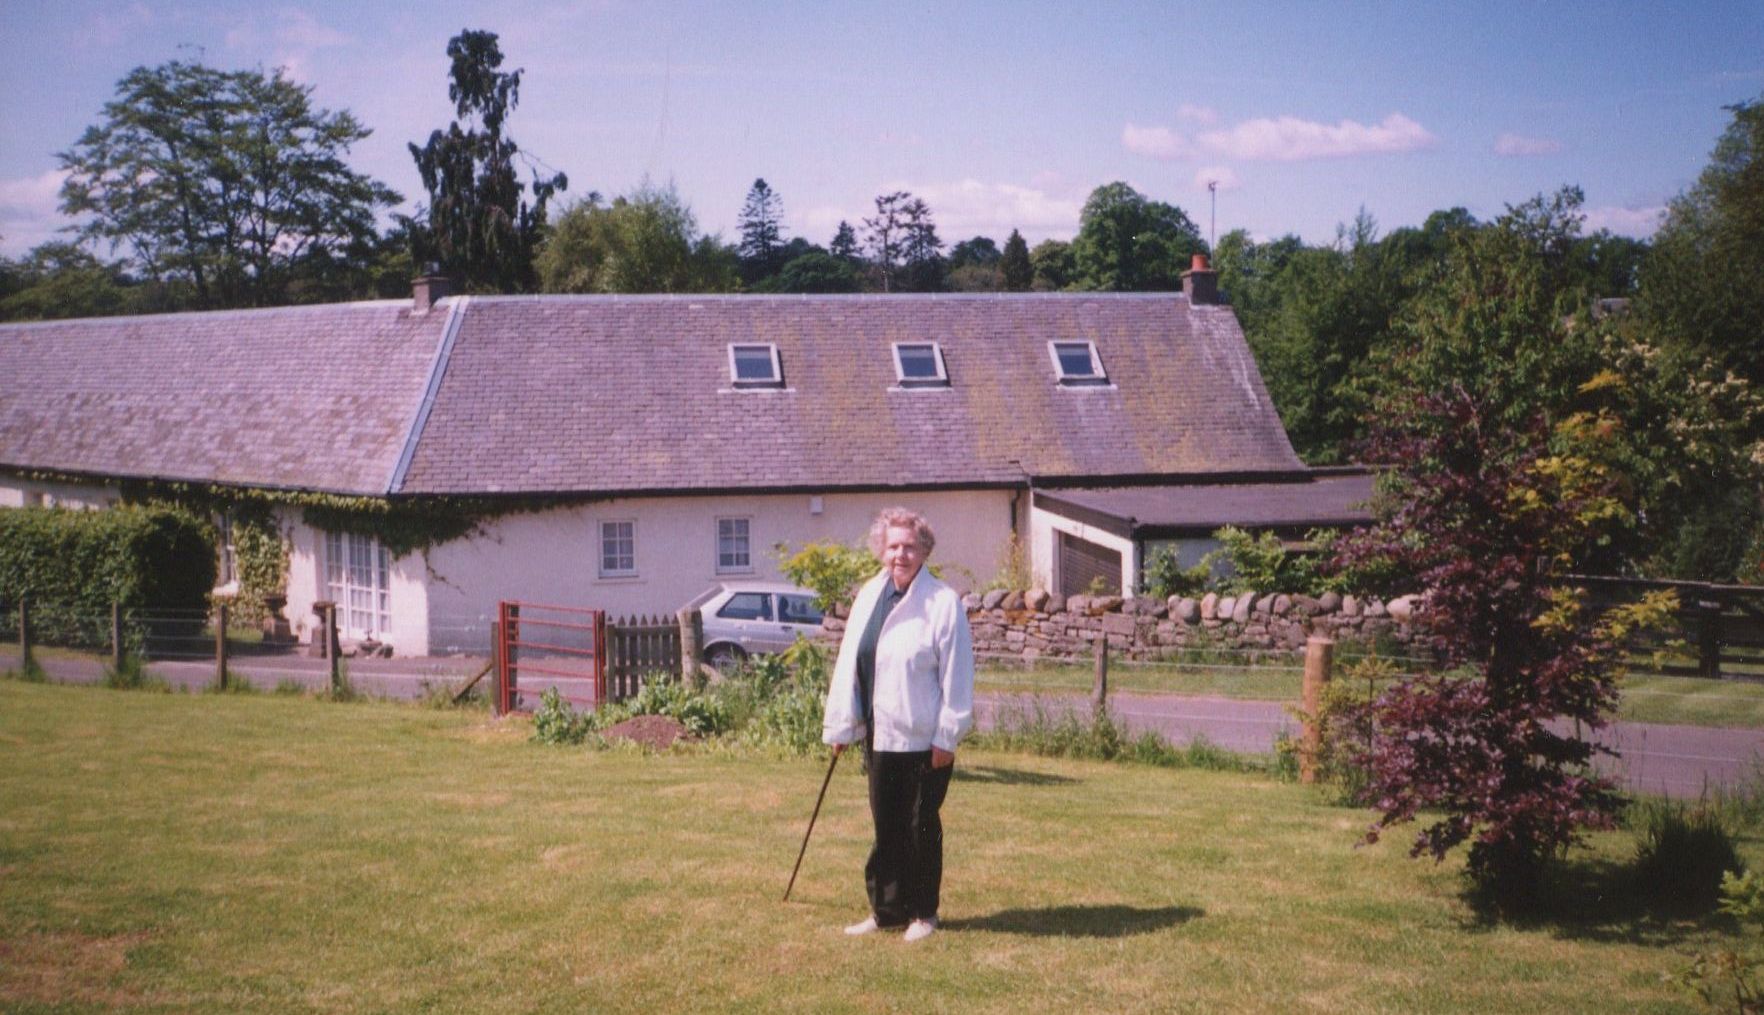 Charlotte ( Cameron ) Ingram at Weaver's Cottage